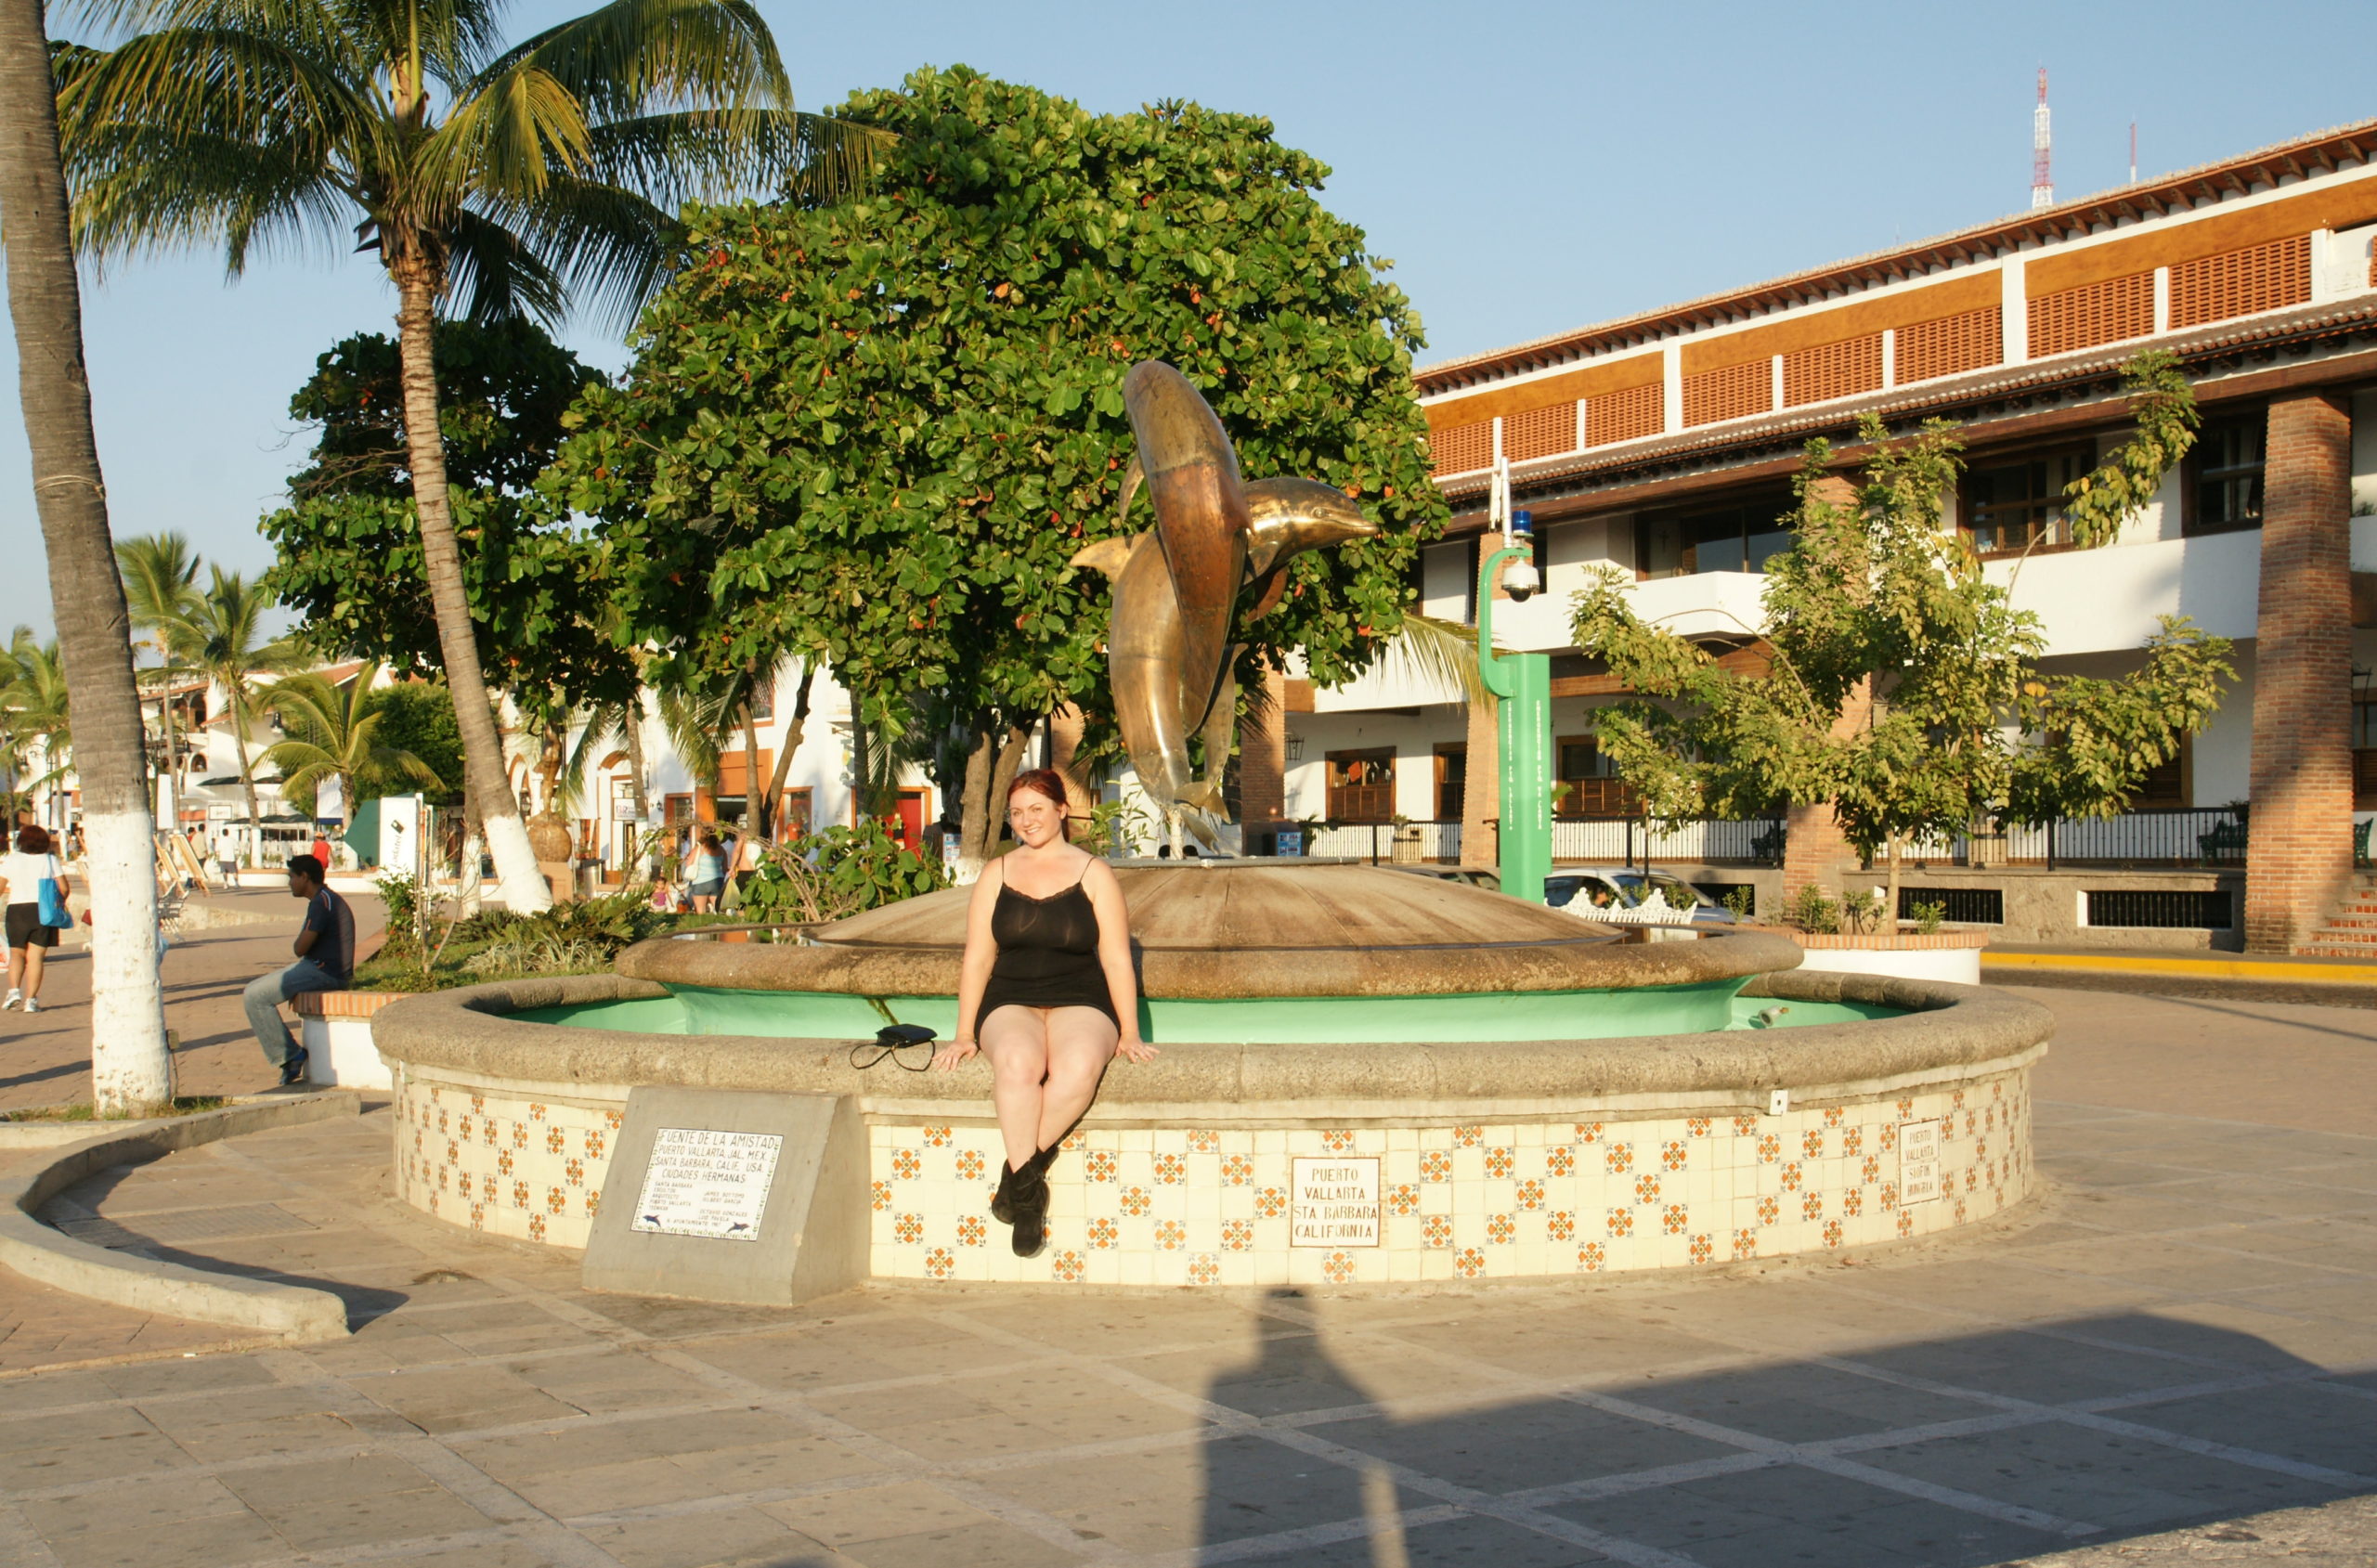 The Friendship Fountain, aka the Dancing Dolphins Fountain.